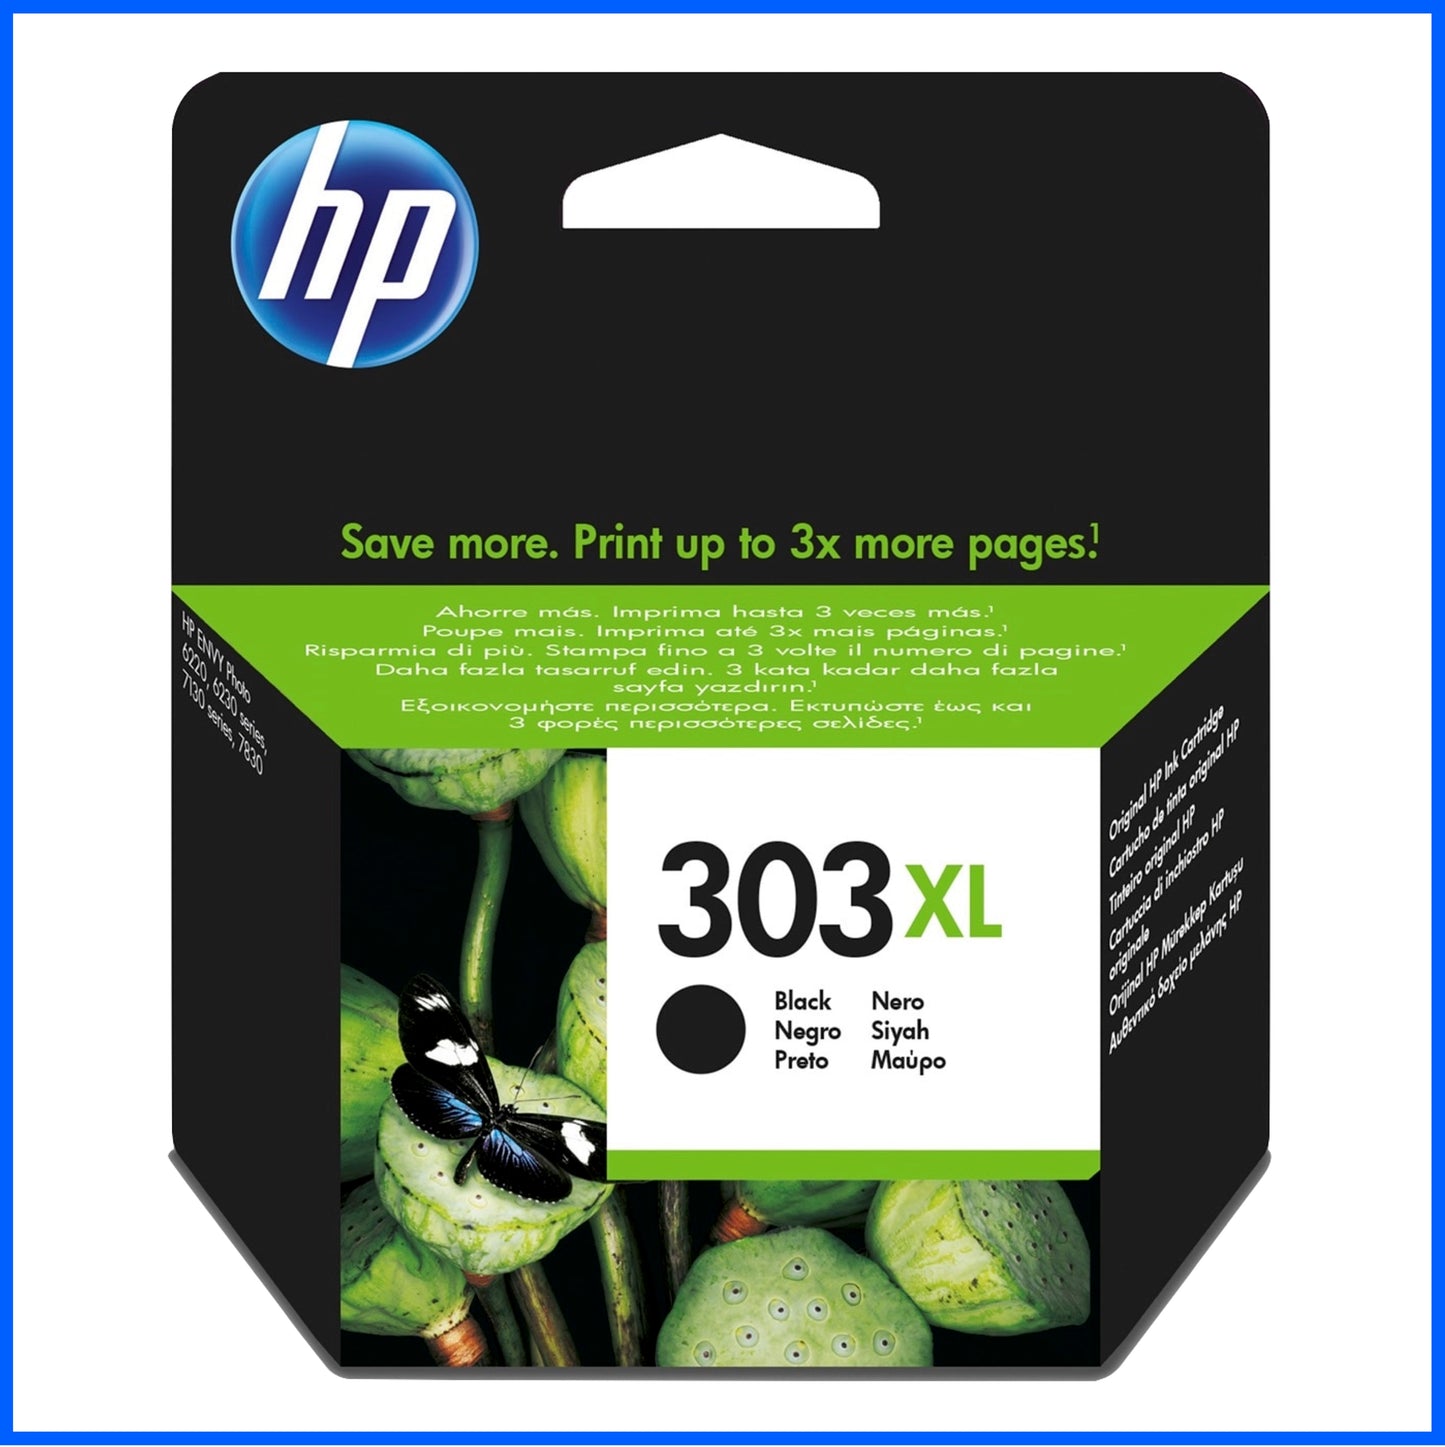 HP 303XL High Capacity Black Ink Cartridge (Original)